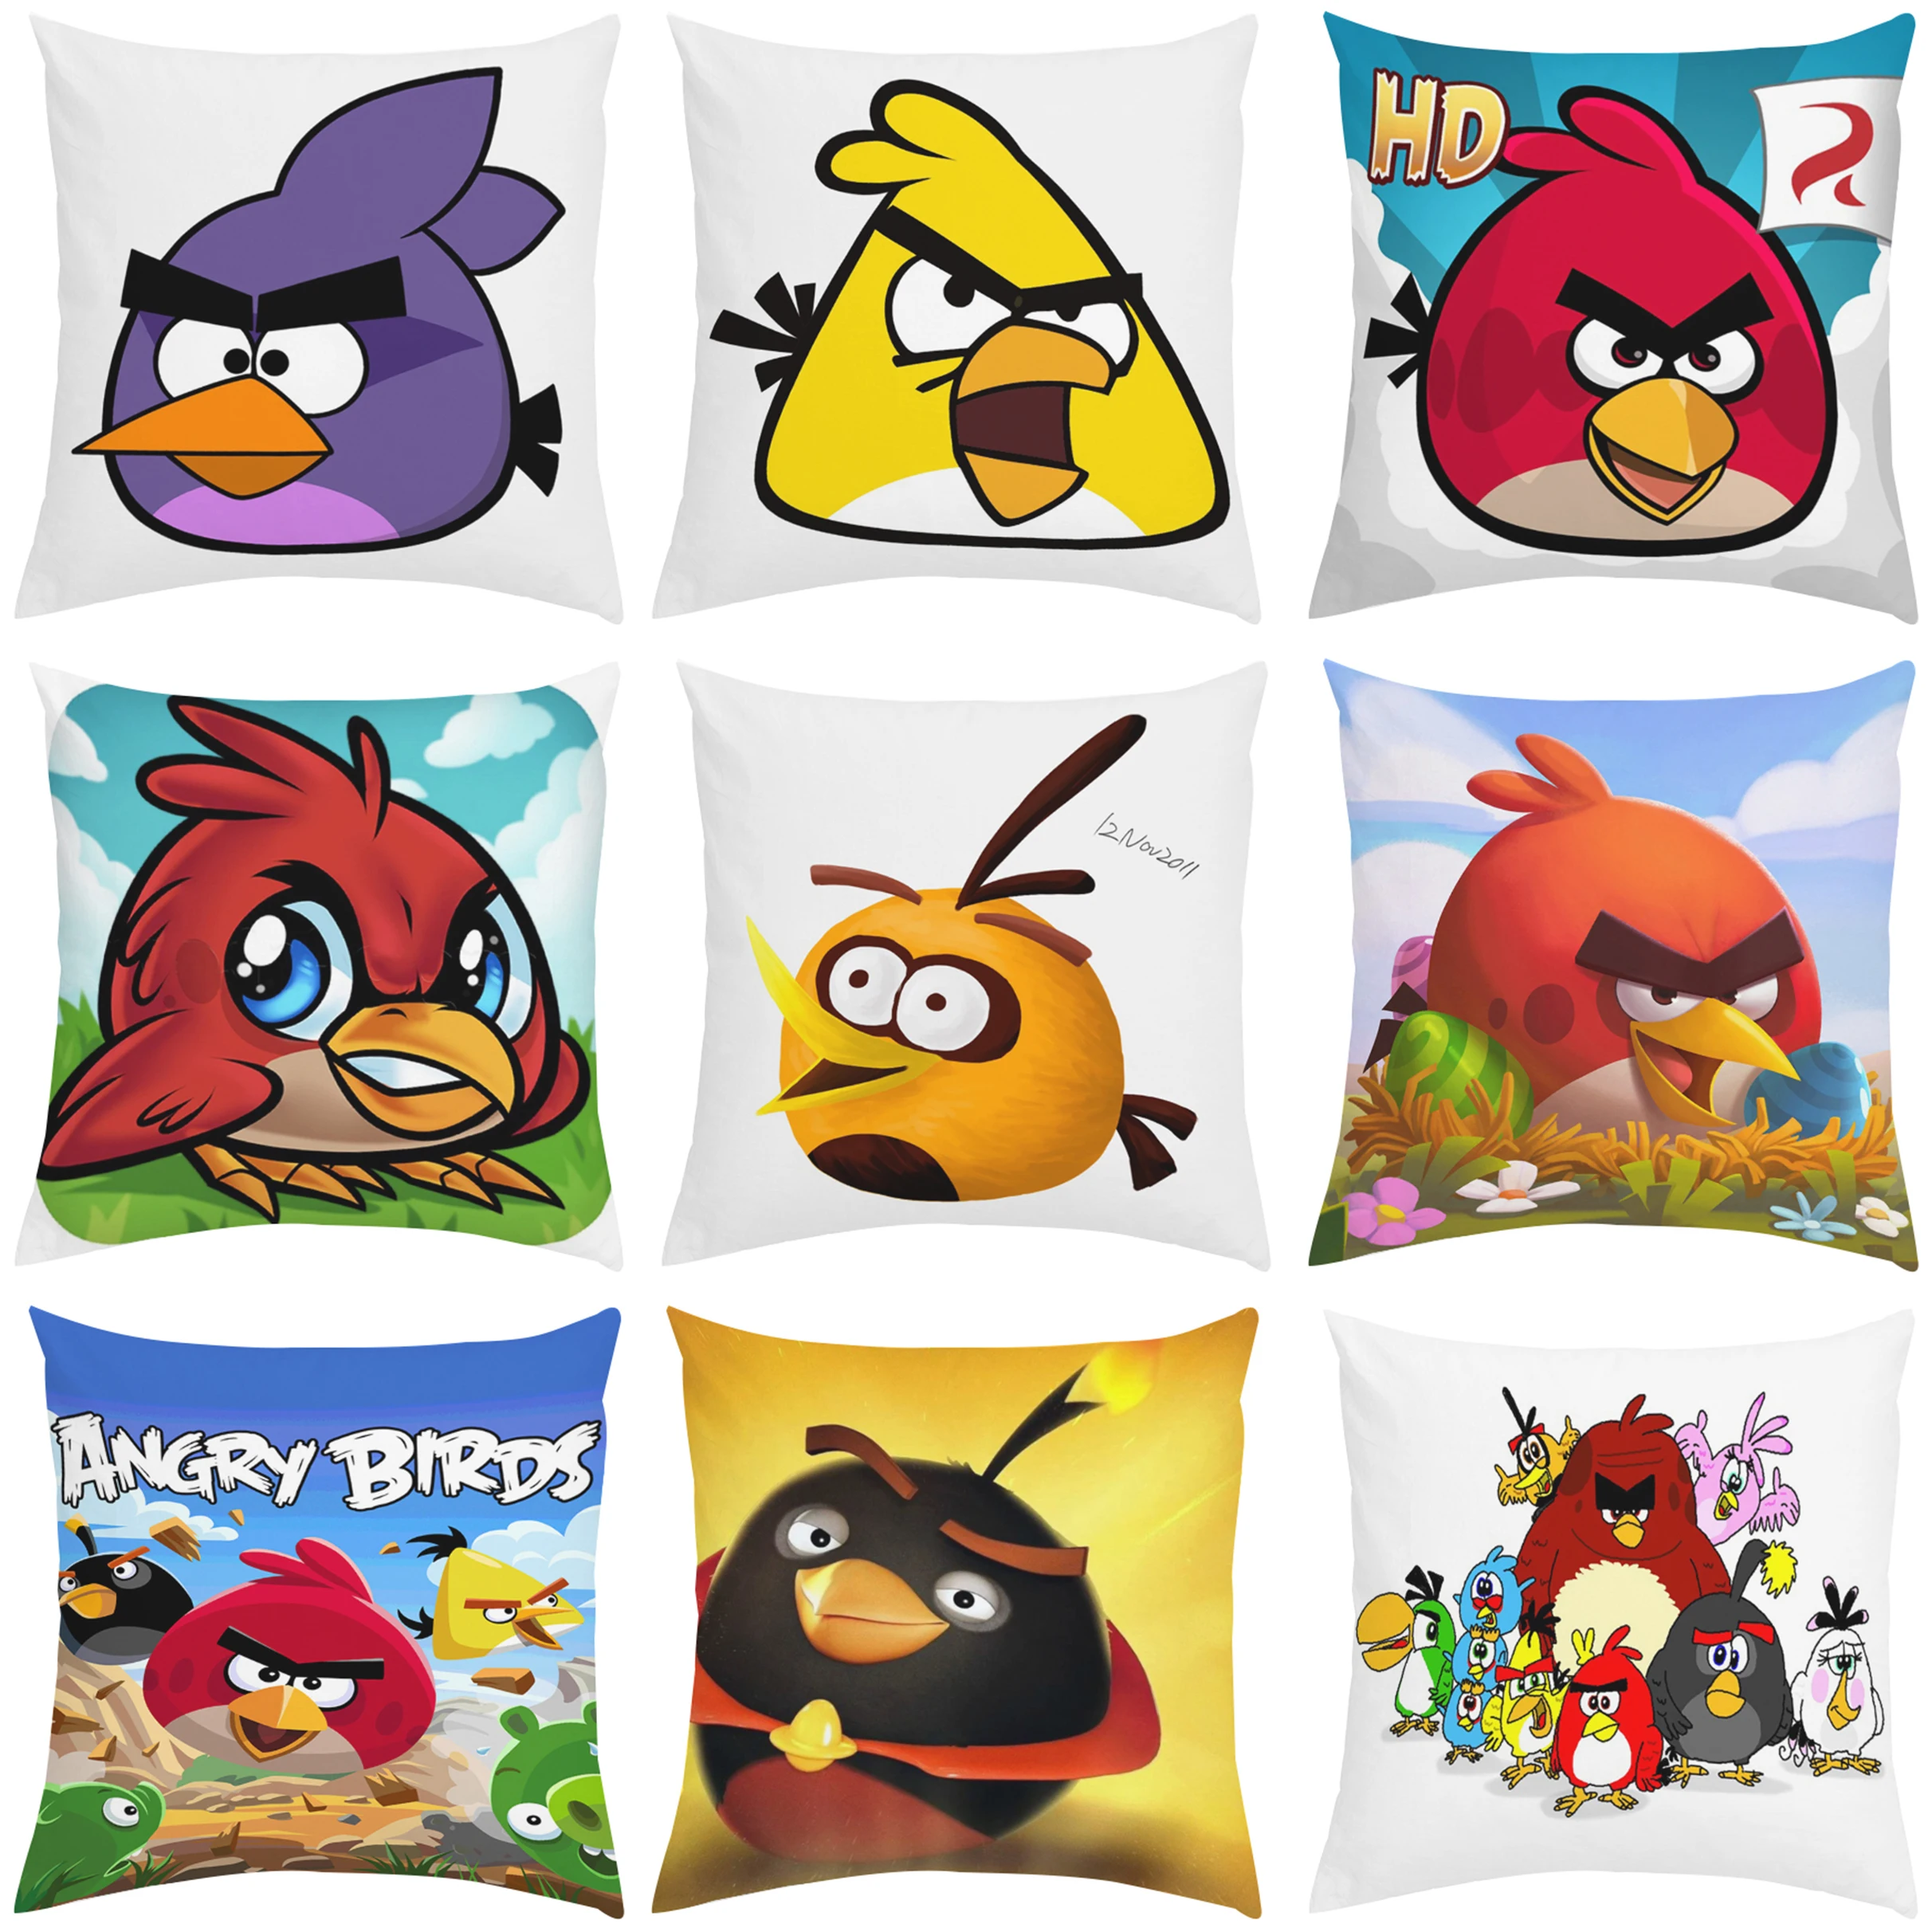 

A-Angry Birds Cushions Home Decor Pillow Cover Cushion Covers for Bed Pillows Decorative Pillowcases 50x50 Pillowcase Sofa 45x45